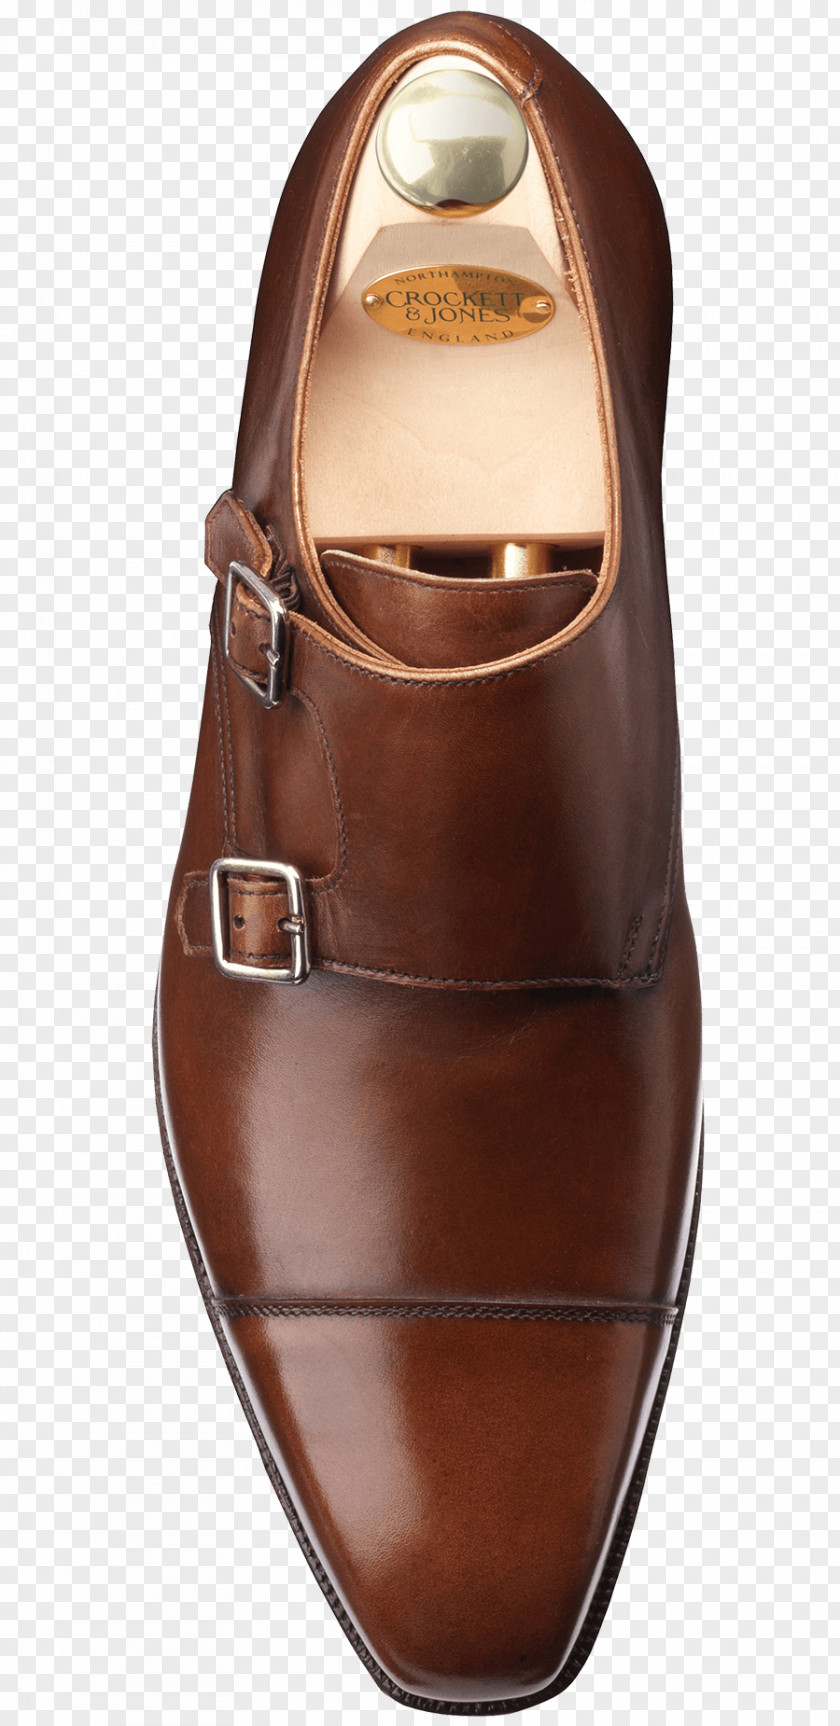 Goodyear Welt Shoe Crockett & Jones Leather Calf Suit PNG